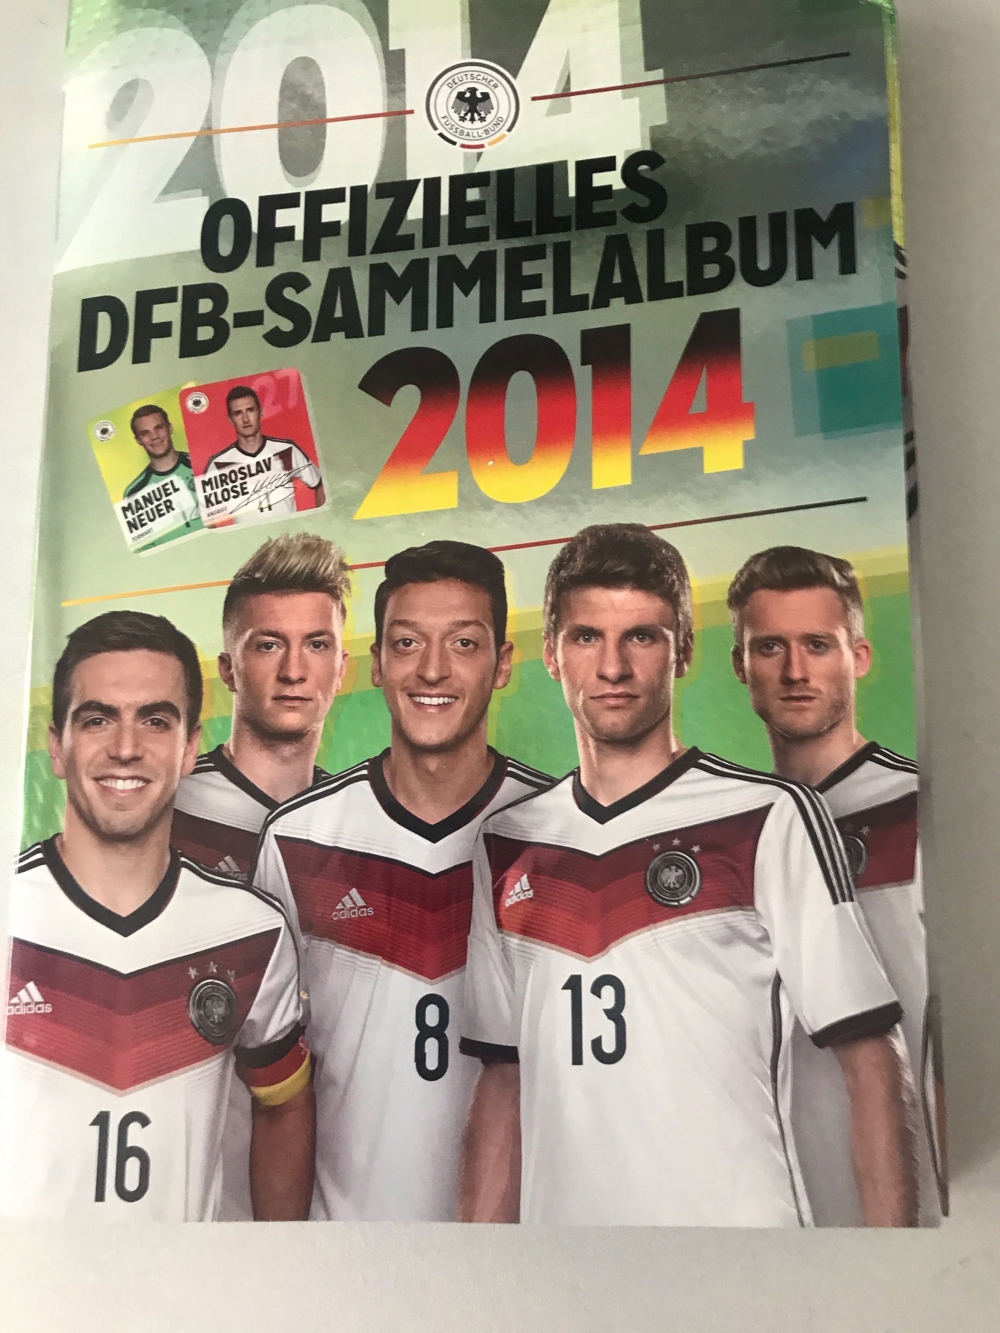 Sammelalbum, offizielles DFB Album zur WM 2014